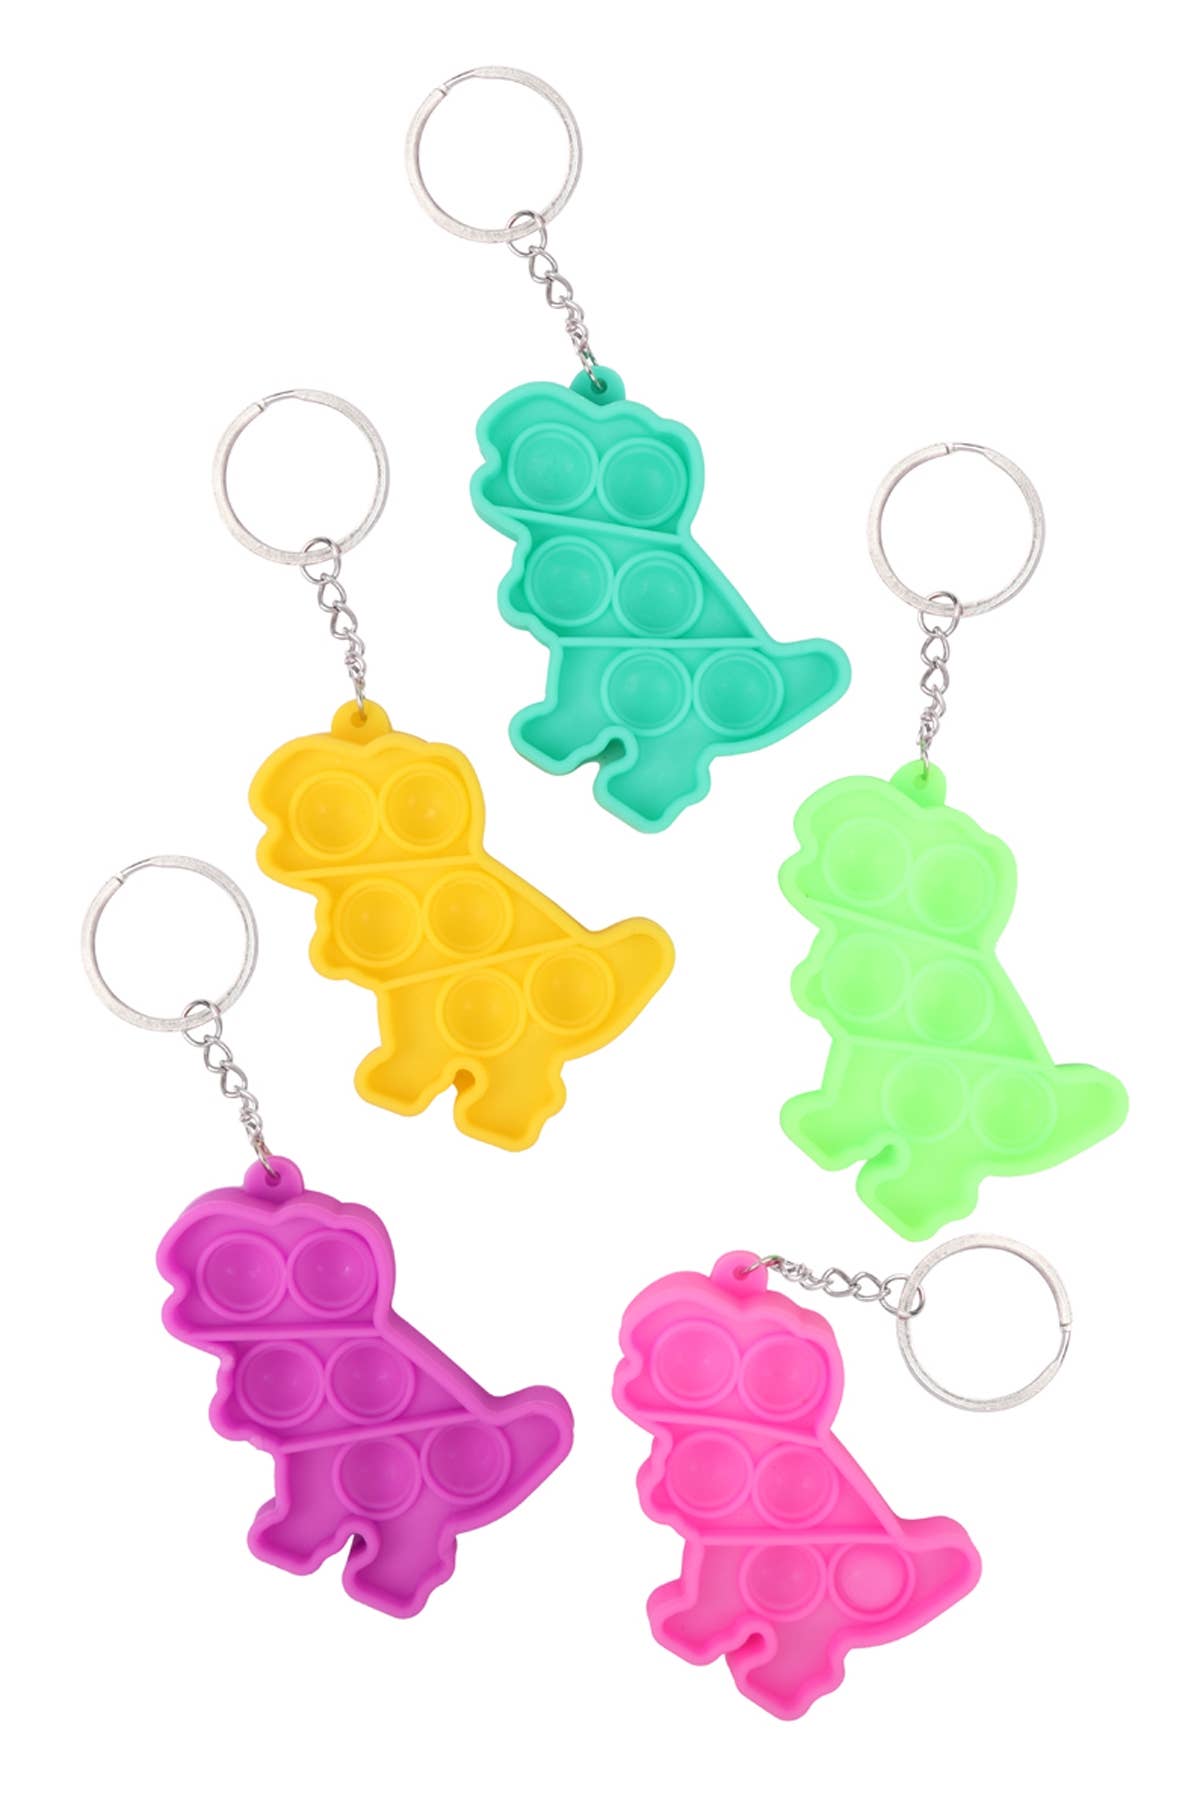 Mini Dinosaur Push Pop Bubble Fidget Toy Key Chain